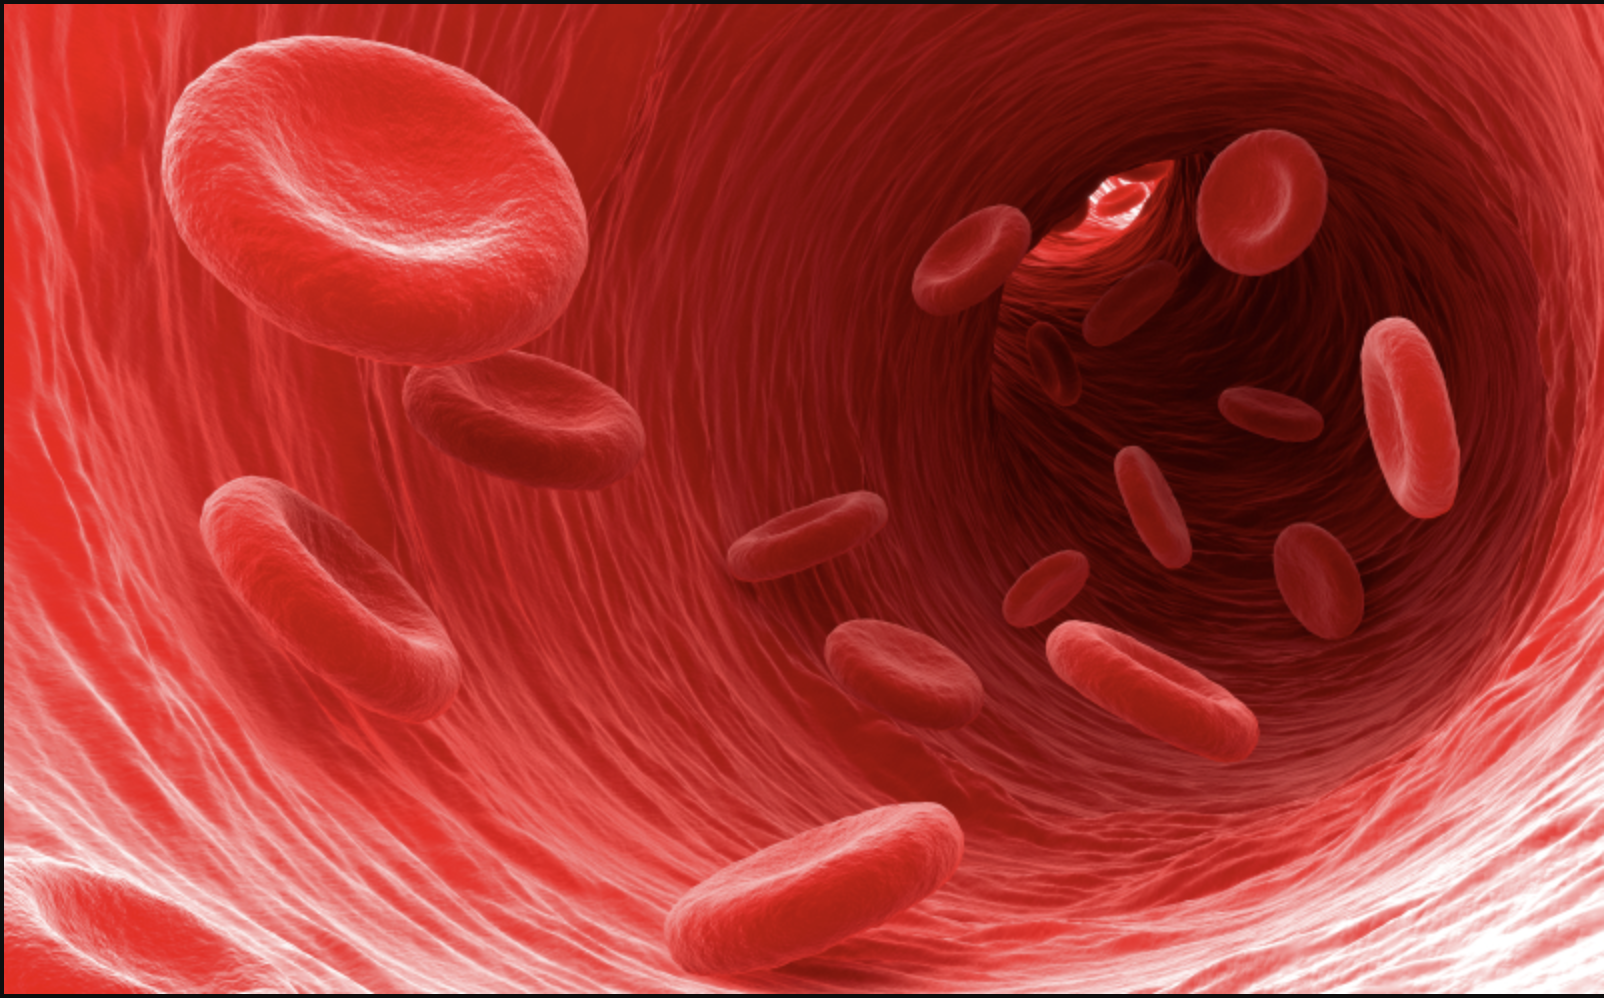 kekurangan sel darah merah